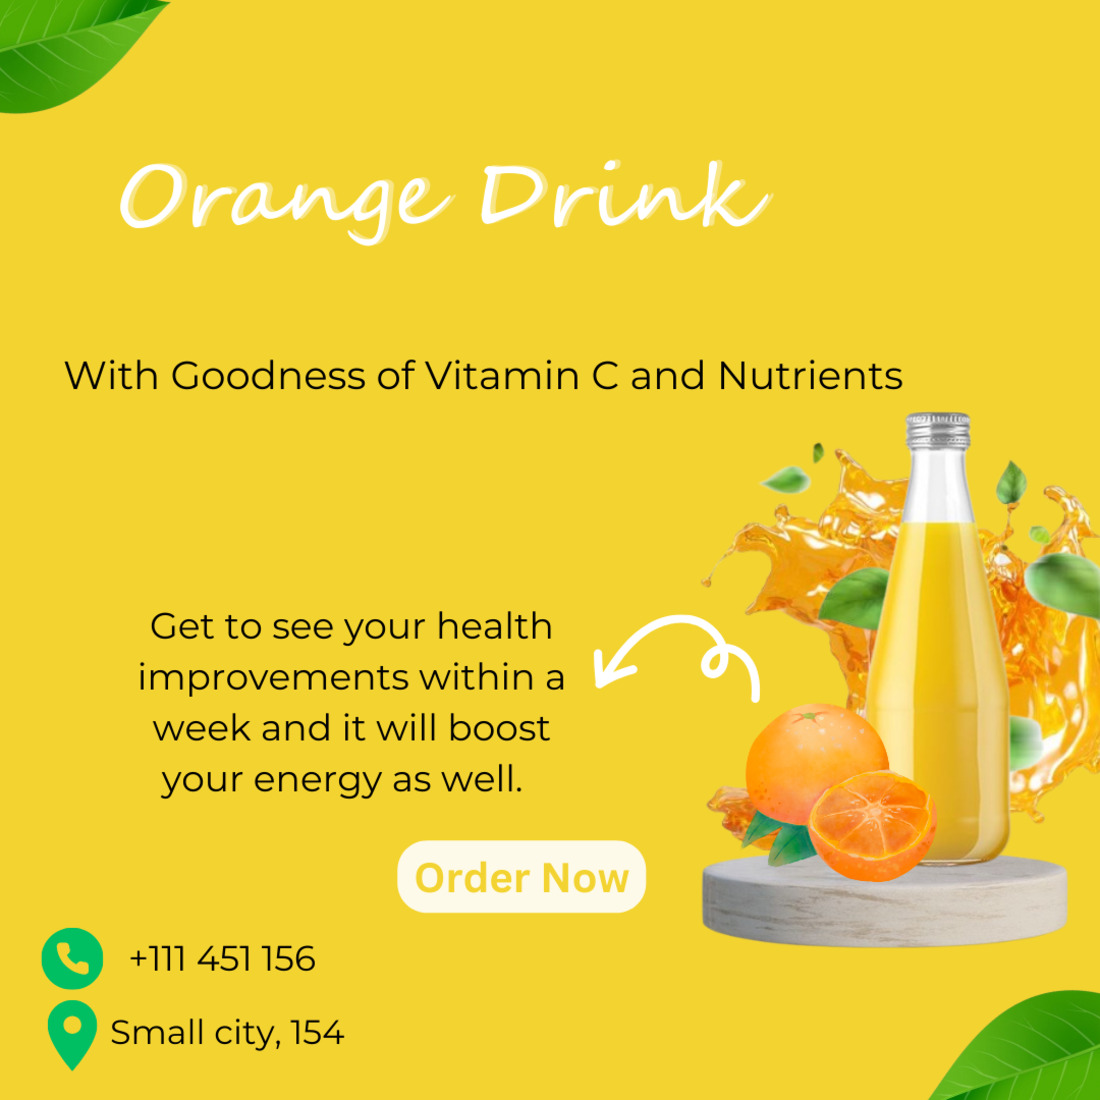 Orange Juice advertising poster preview image.